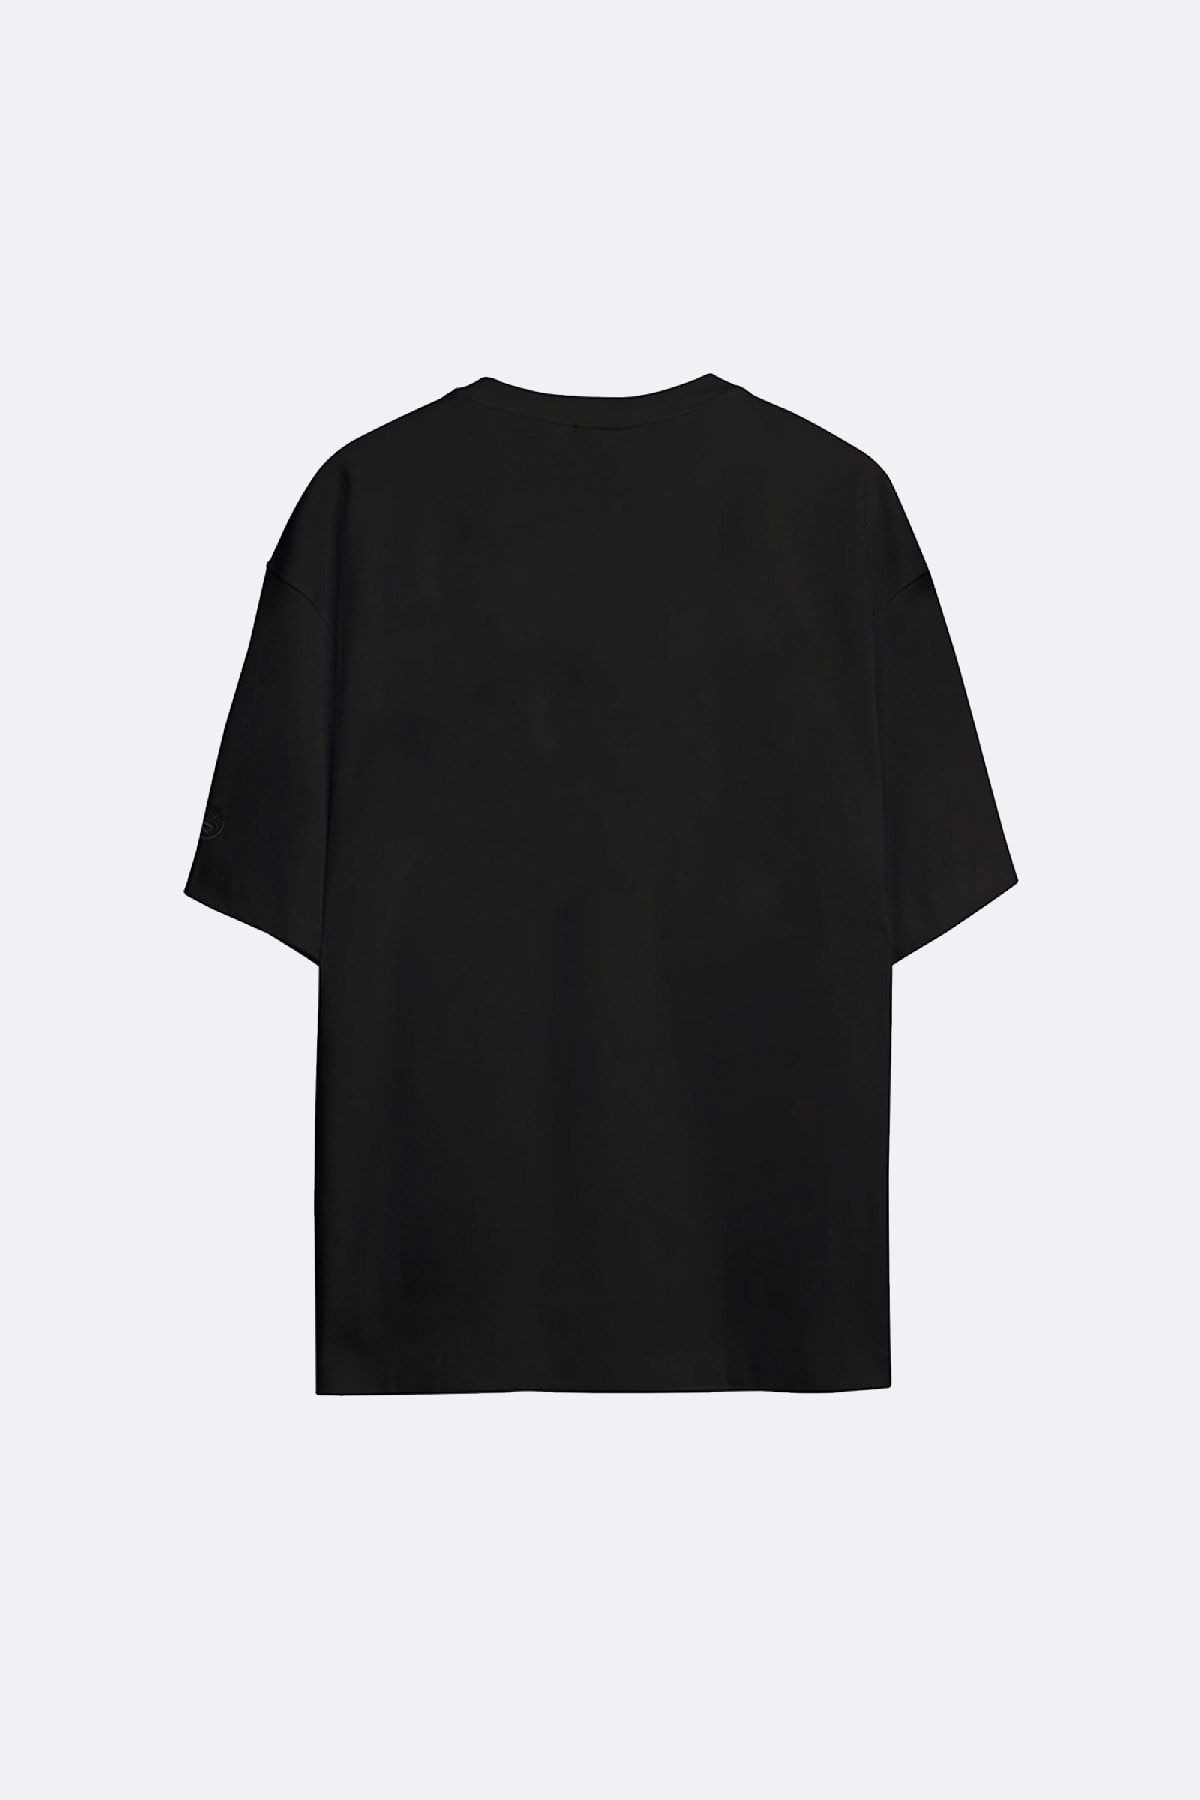 Genel Markalar Unisex Oversize Siyah Yellow Hard Rock T-shirt